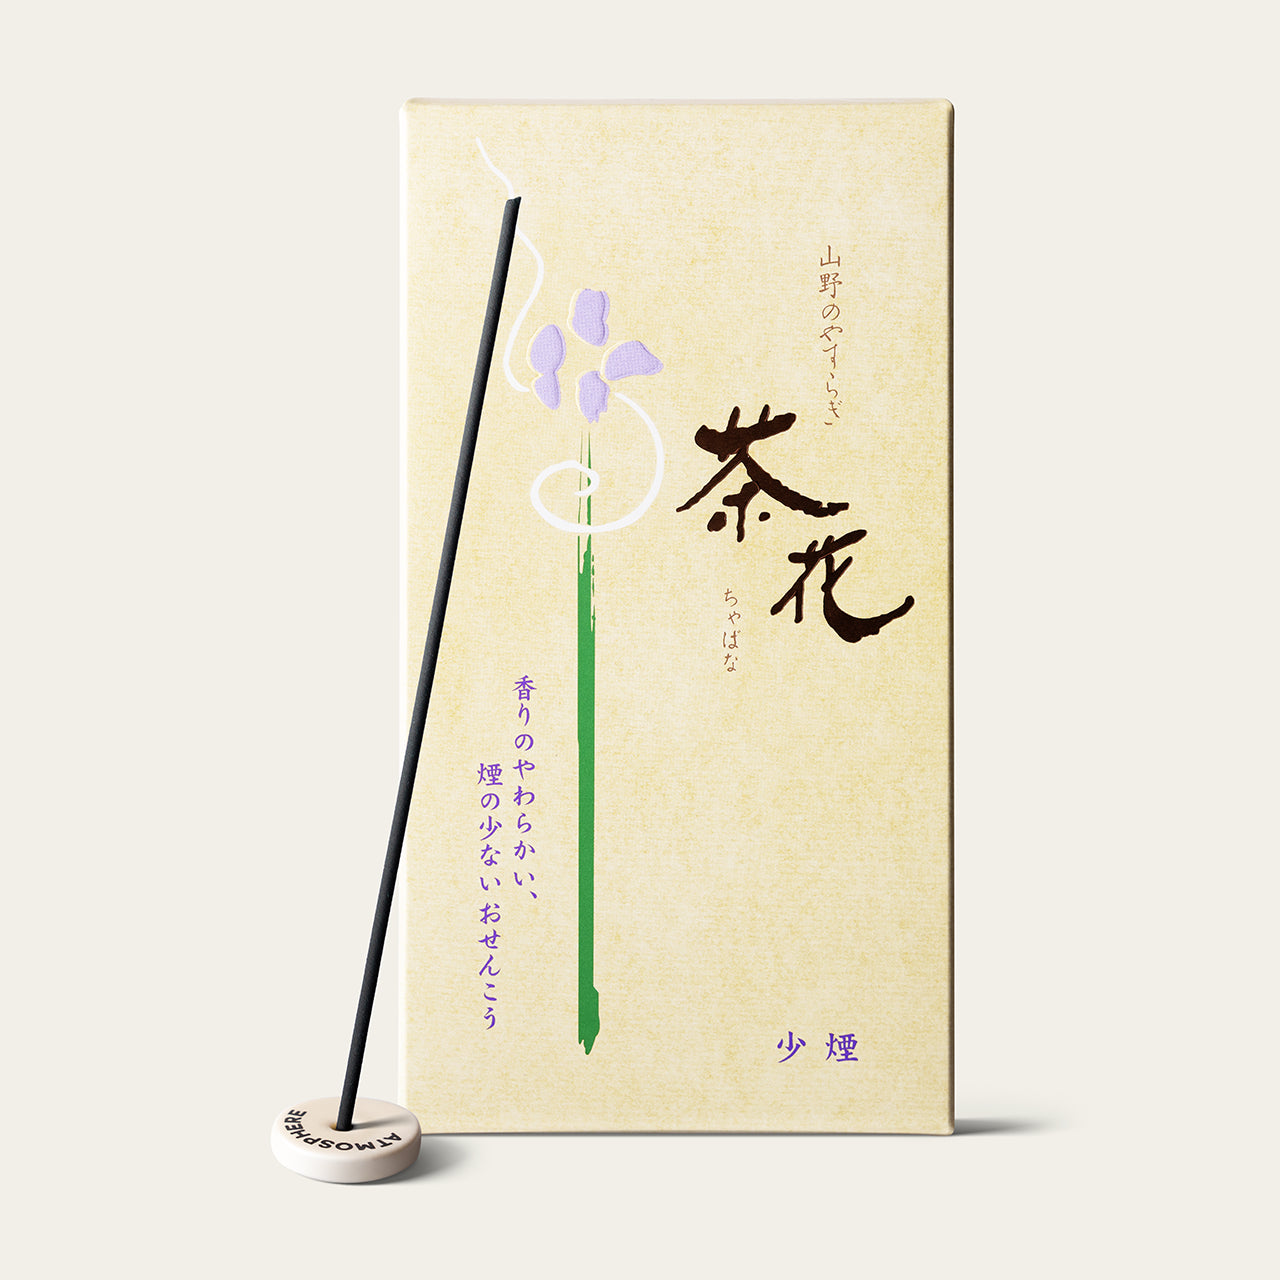 Shorindo Tea Flower Chabana Low Smoke Japanese incense sticks (150 sticks) with Atmosphere ceramic incense holder